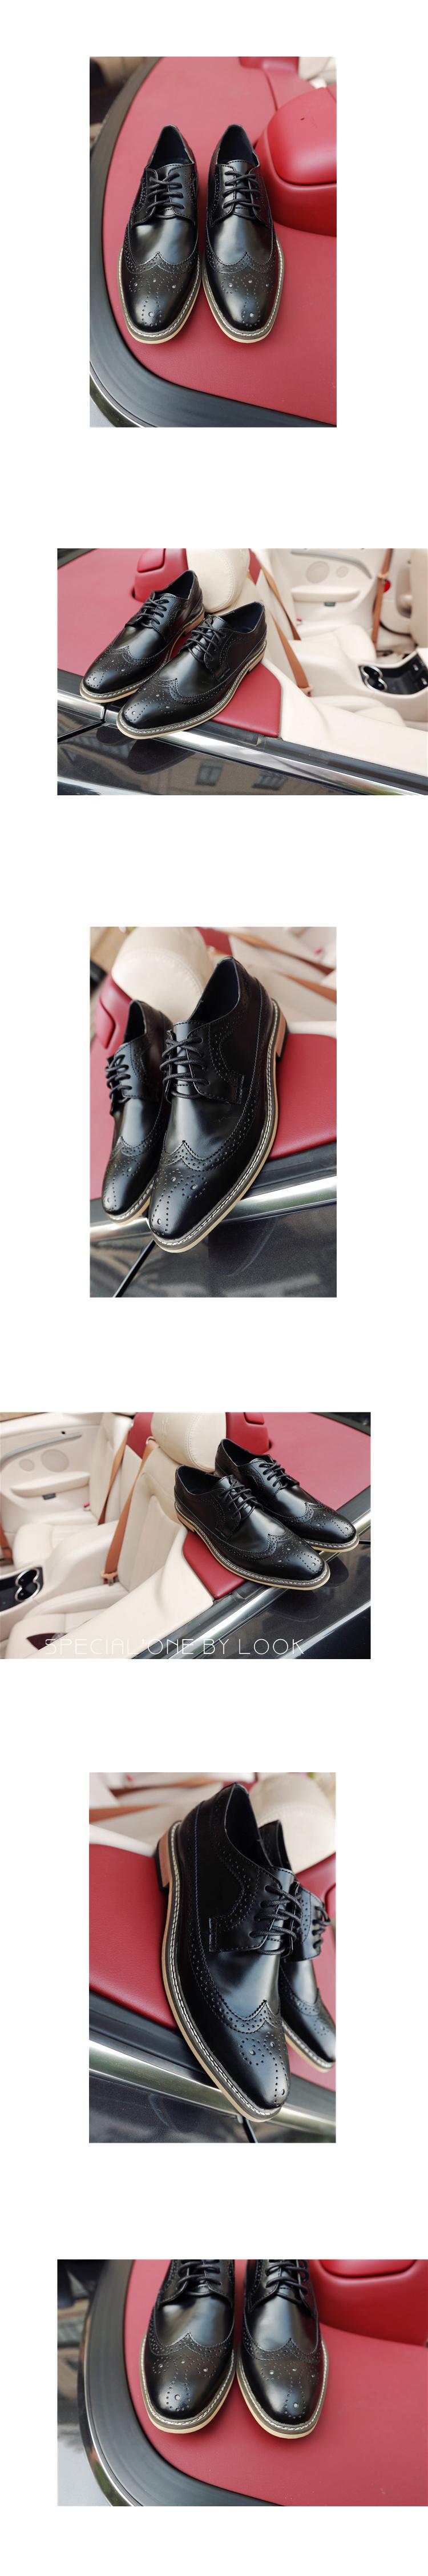 Mr.benyou 2014正品 男士英伦耐磨纯鞋子男 红底布洛克鞋雕花皮鞋H508-X7001-5